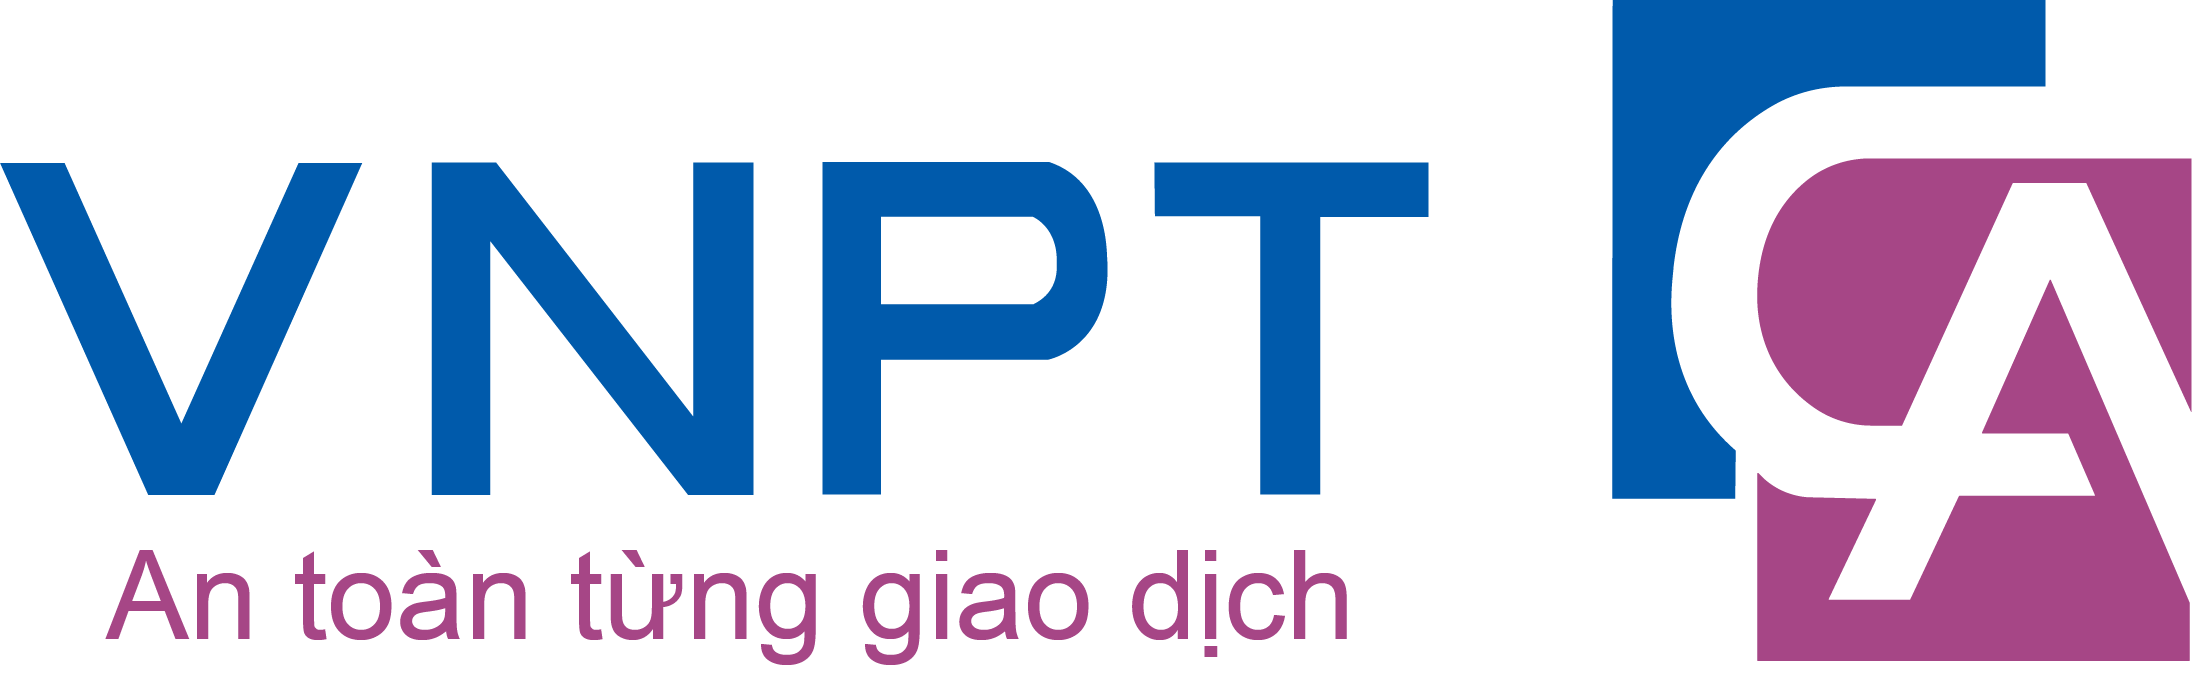 Logo Vnpt Ca